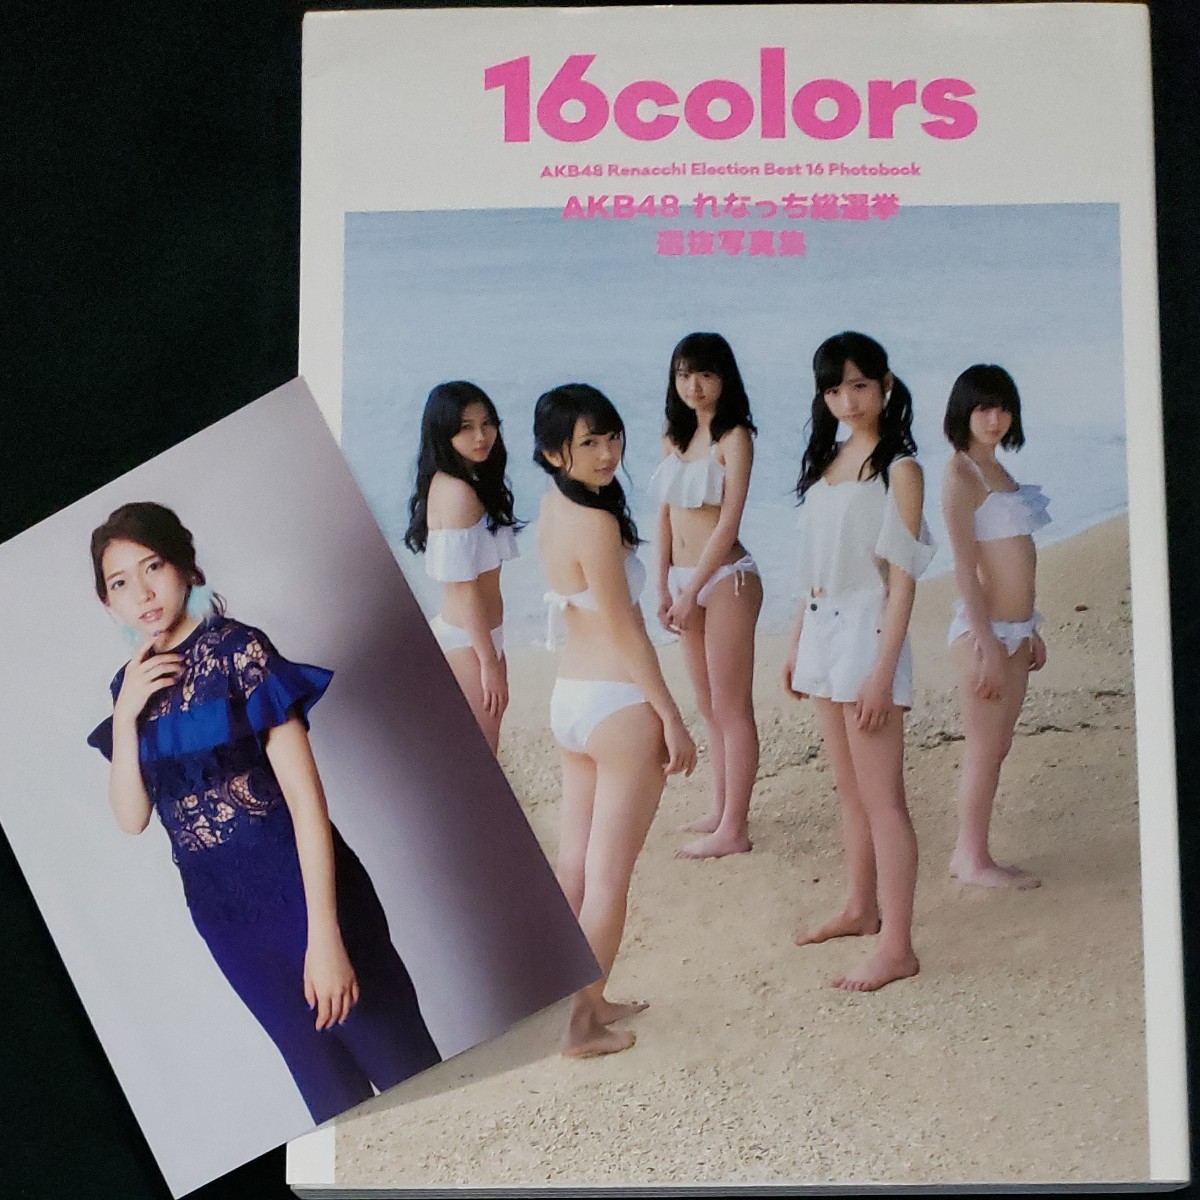 AKB48れなっち総選挙選抜 写真集 16colors